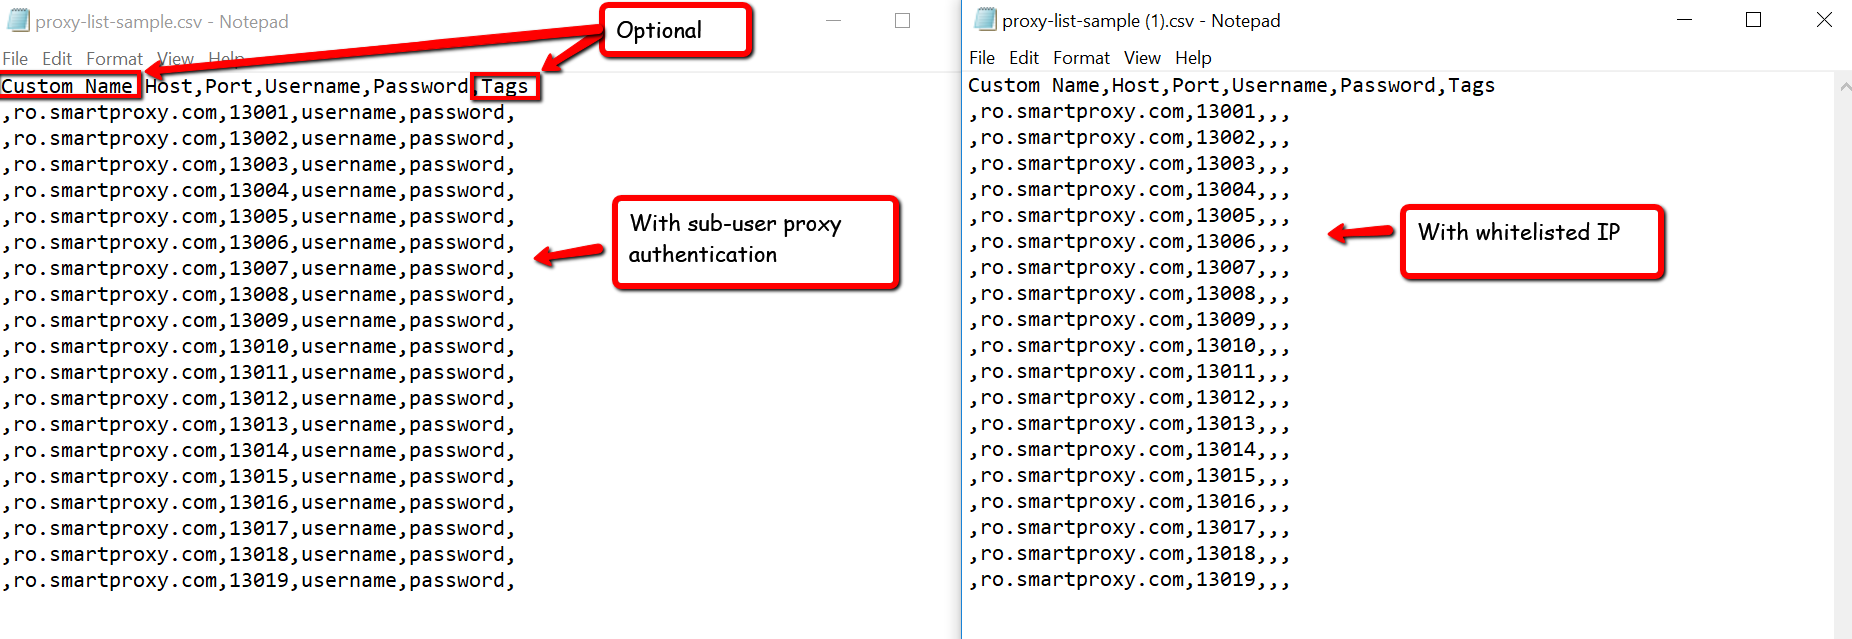 Ghost Browser proxy list sample csv